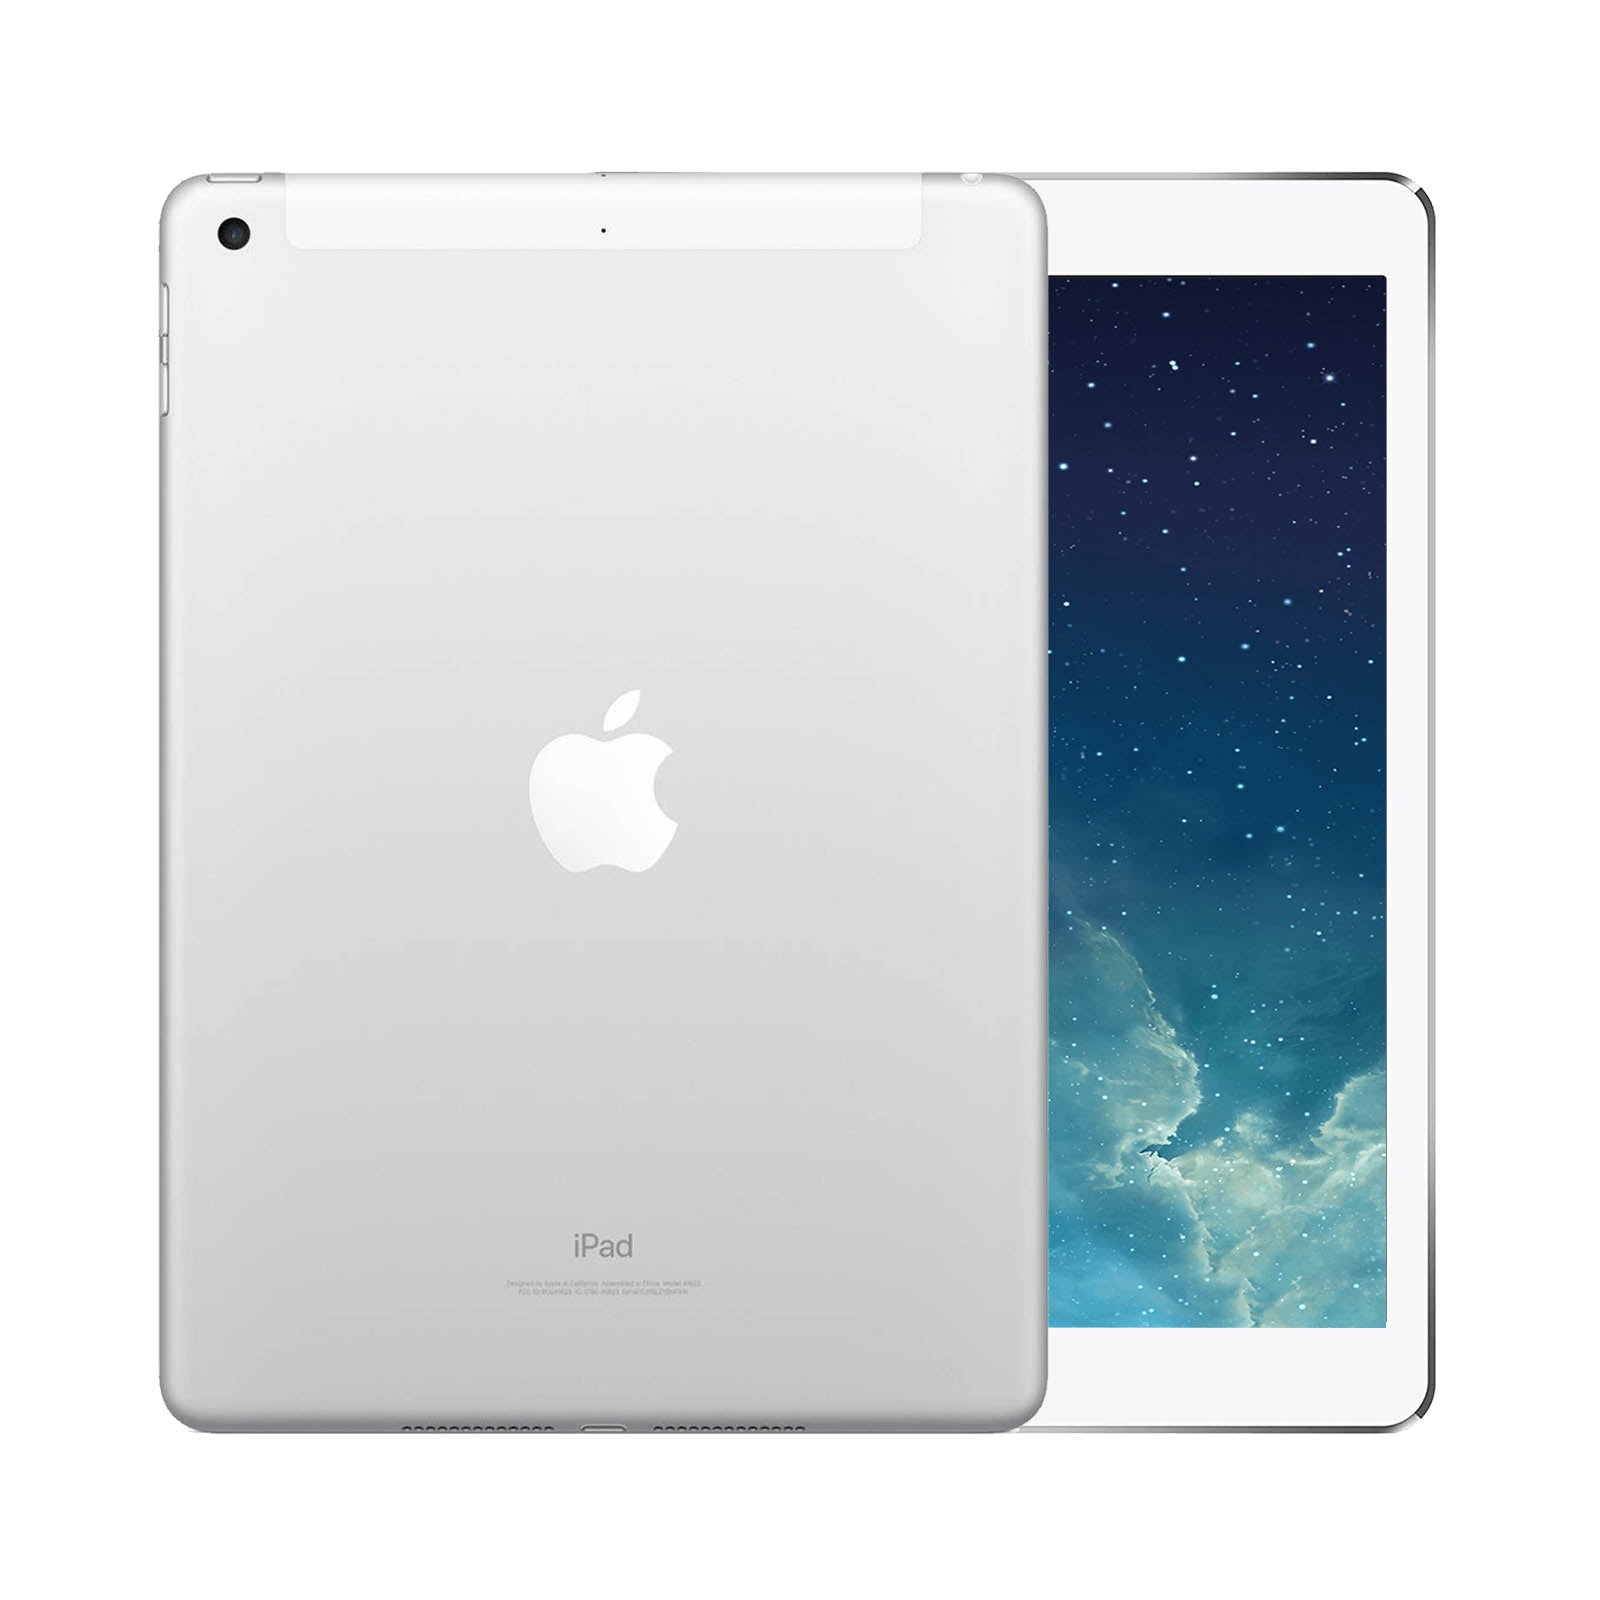 Apple iPad Air 64GB Silver Pristine - Unlocked